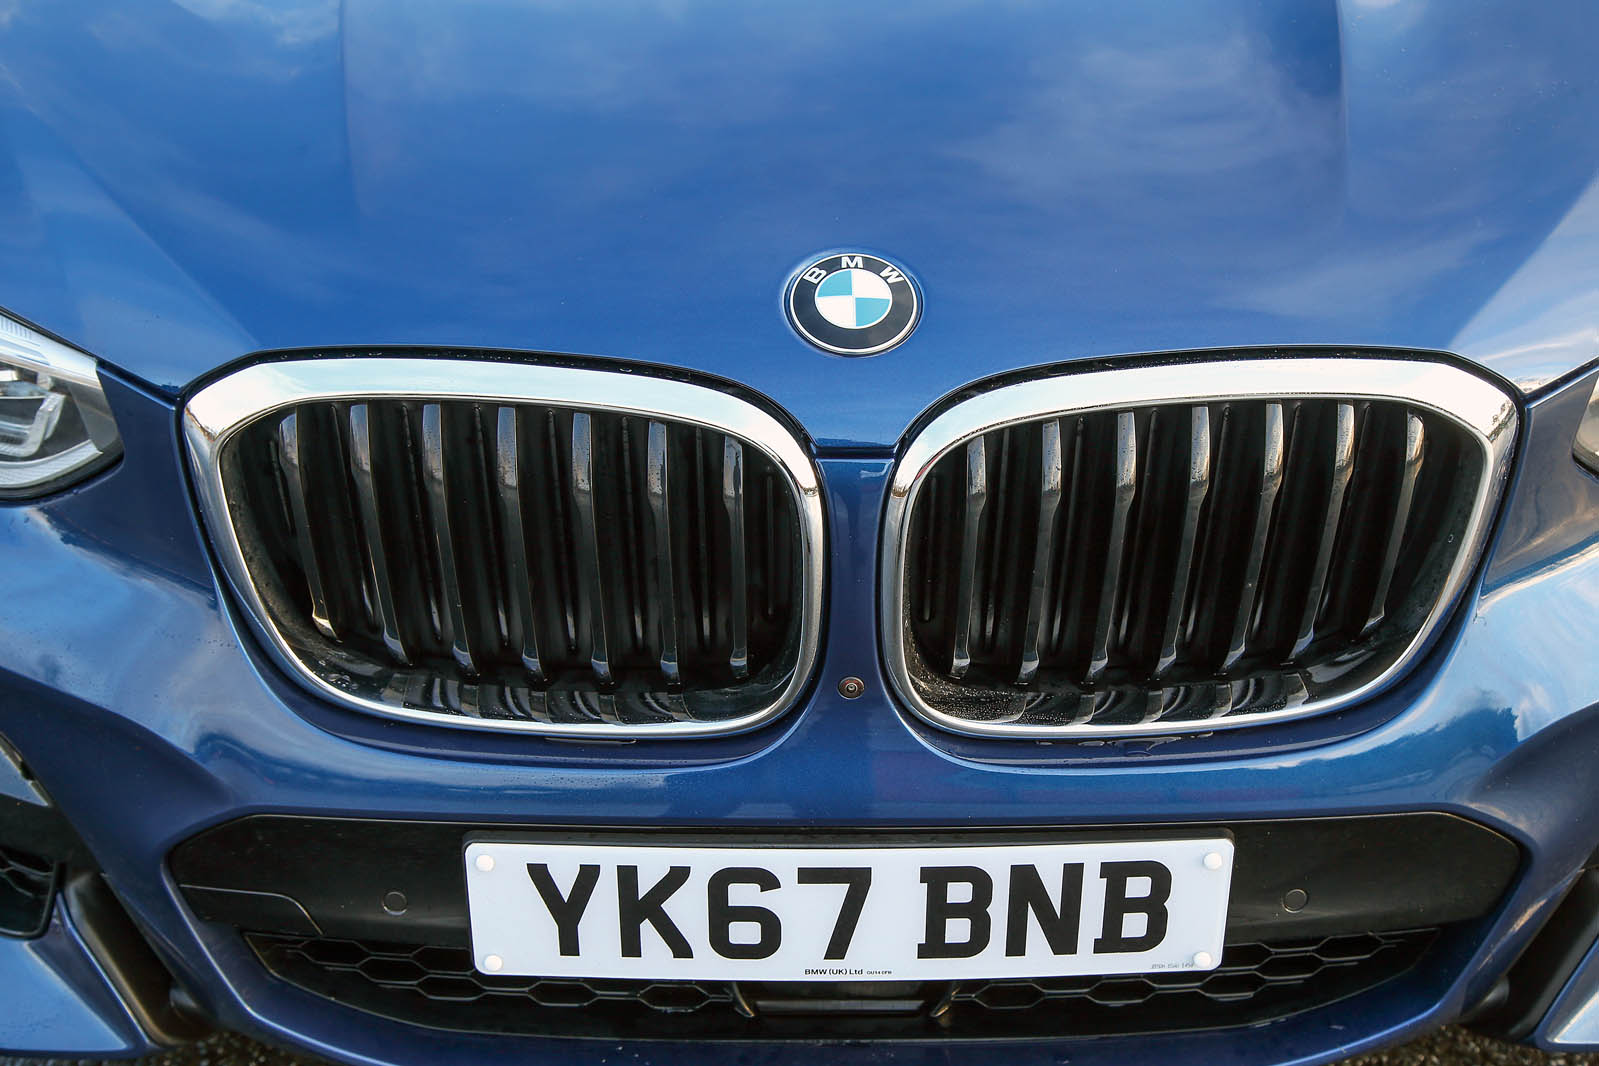 BMW X3 front kidney grille